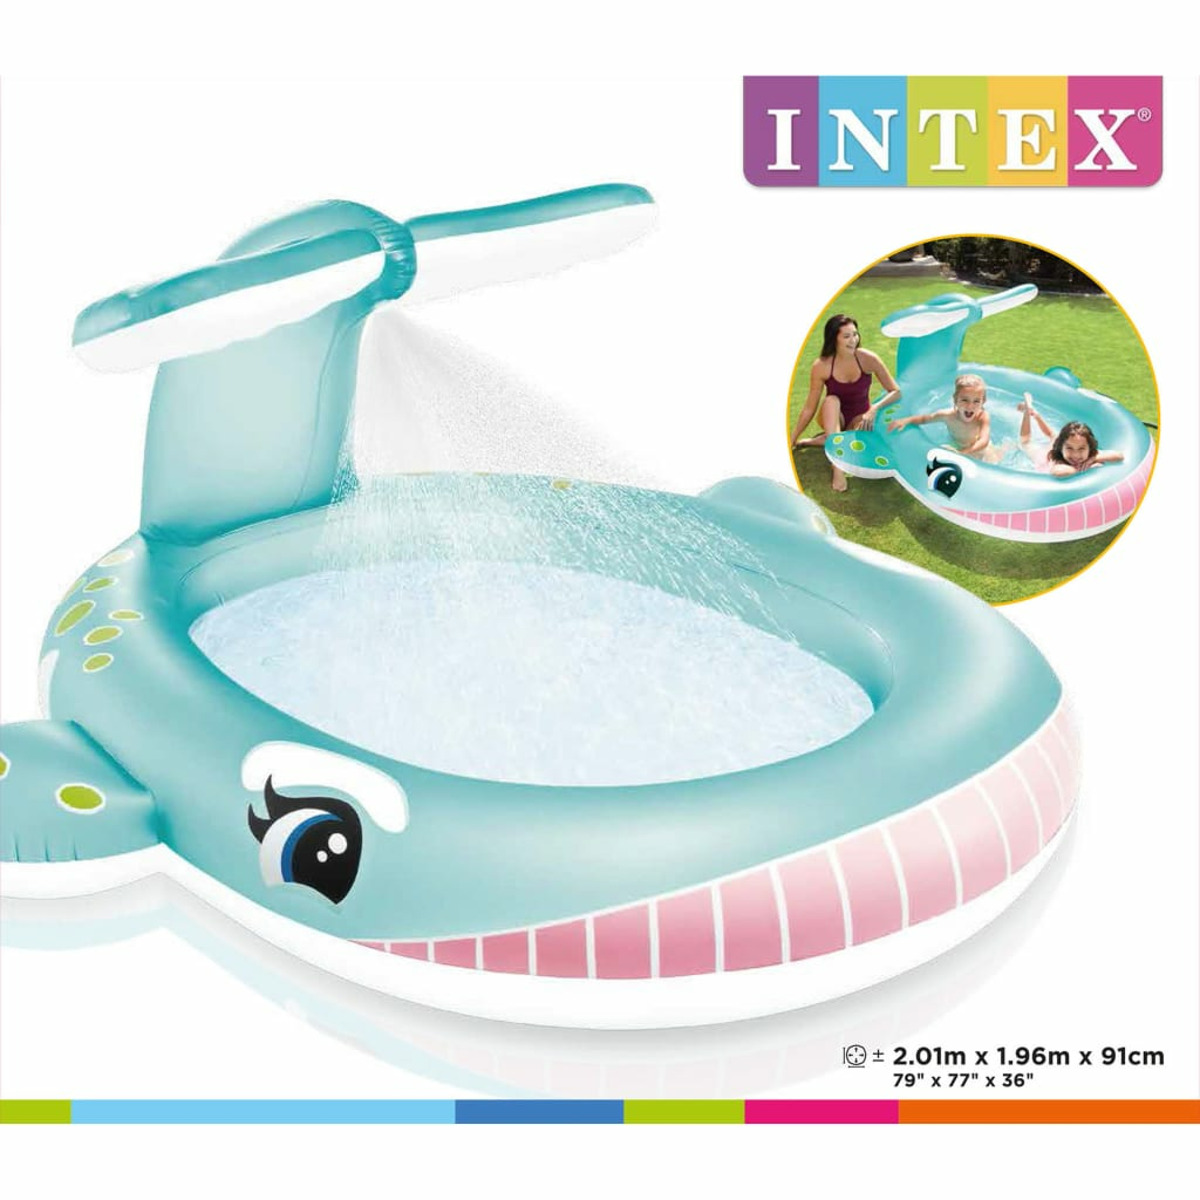 INTEX 3202900 Pool, Mehrfarbig